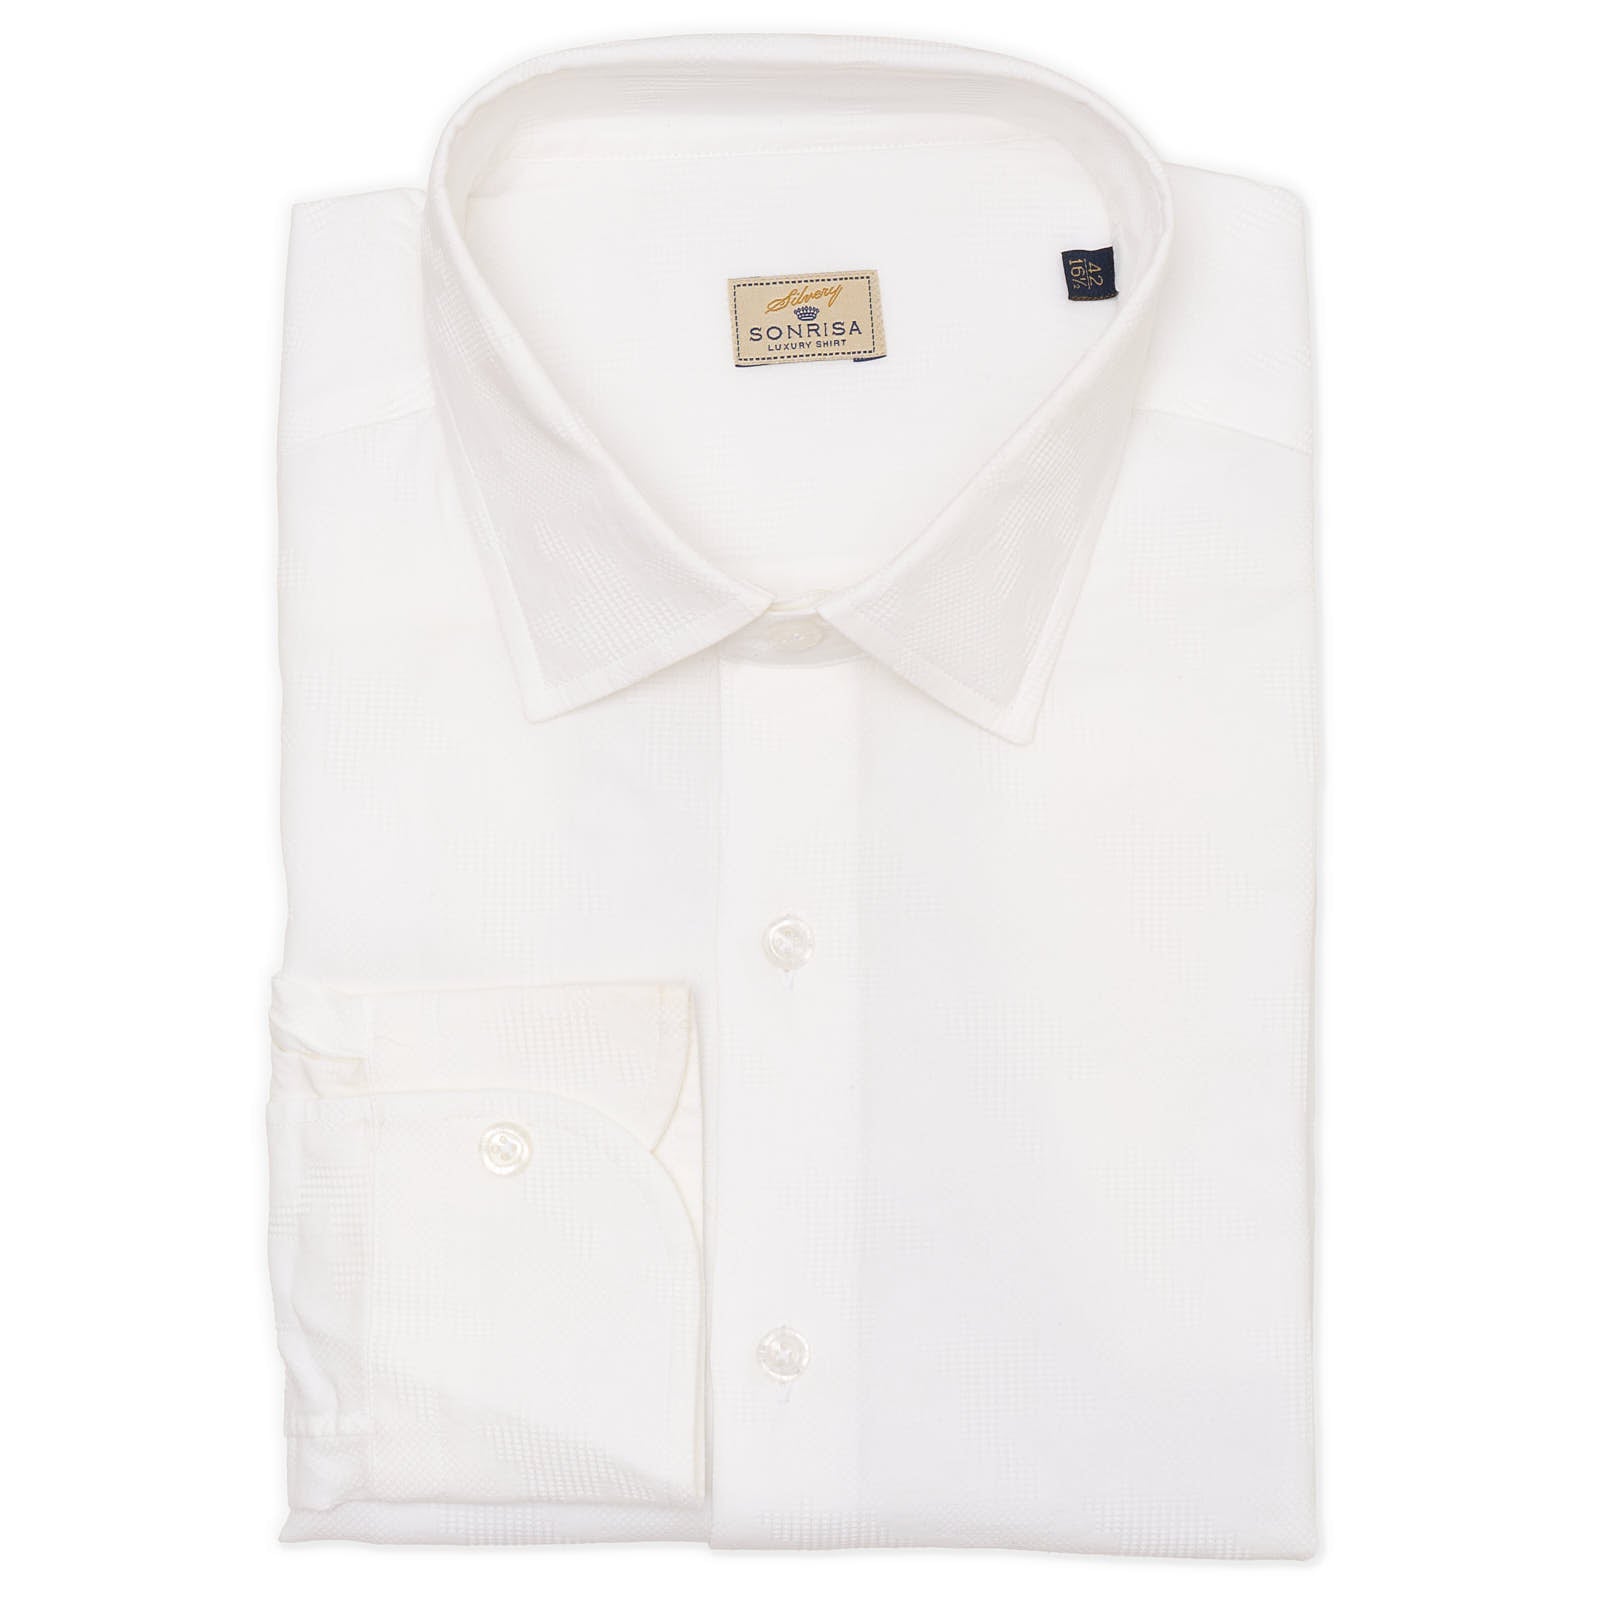 SONRISA Milano White Cotton Dress Shirt EU 42 NEW US 16.5